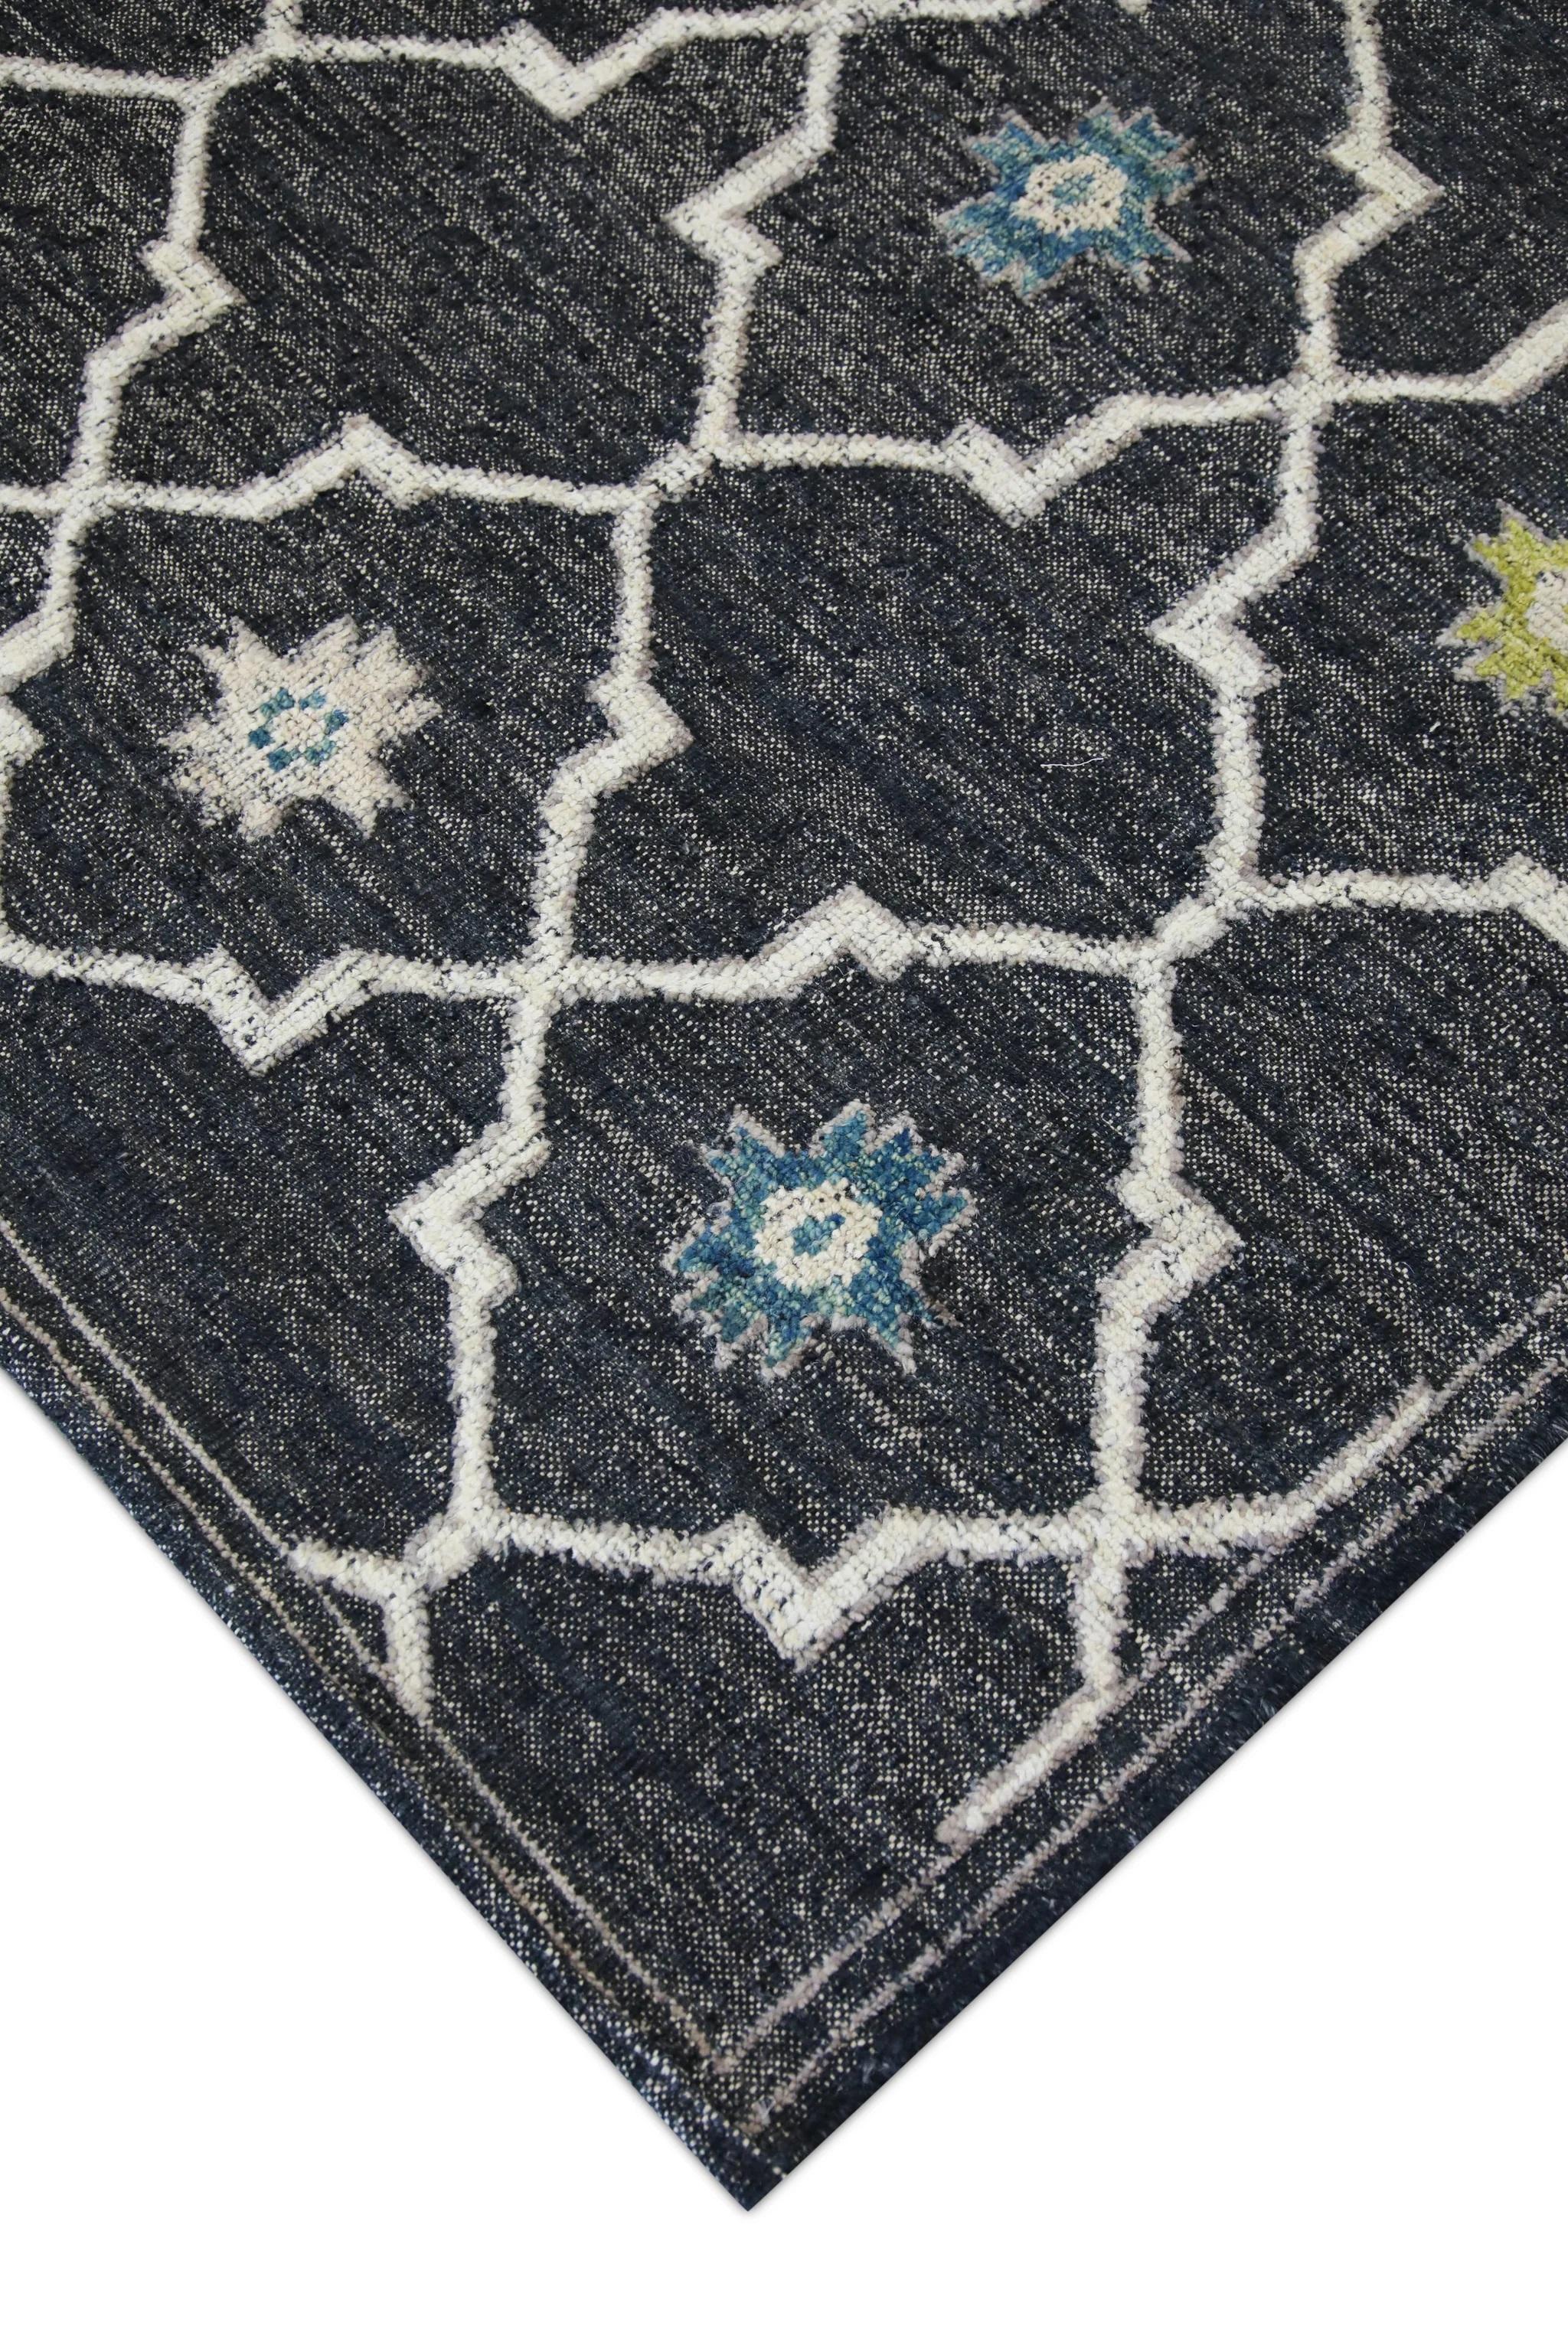 Vegetable Dyed Charcoal Flatweave Handmade Wool Rug in Blue & Green Geometric Design 10' X 12'4 For Sale